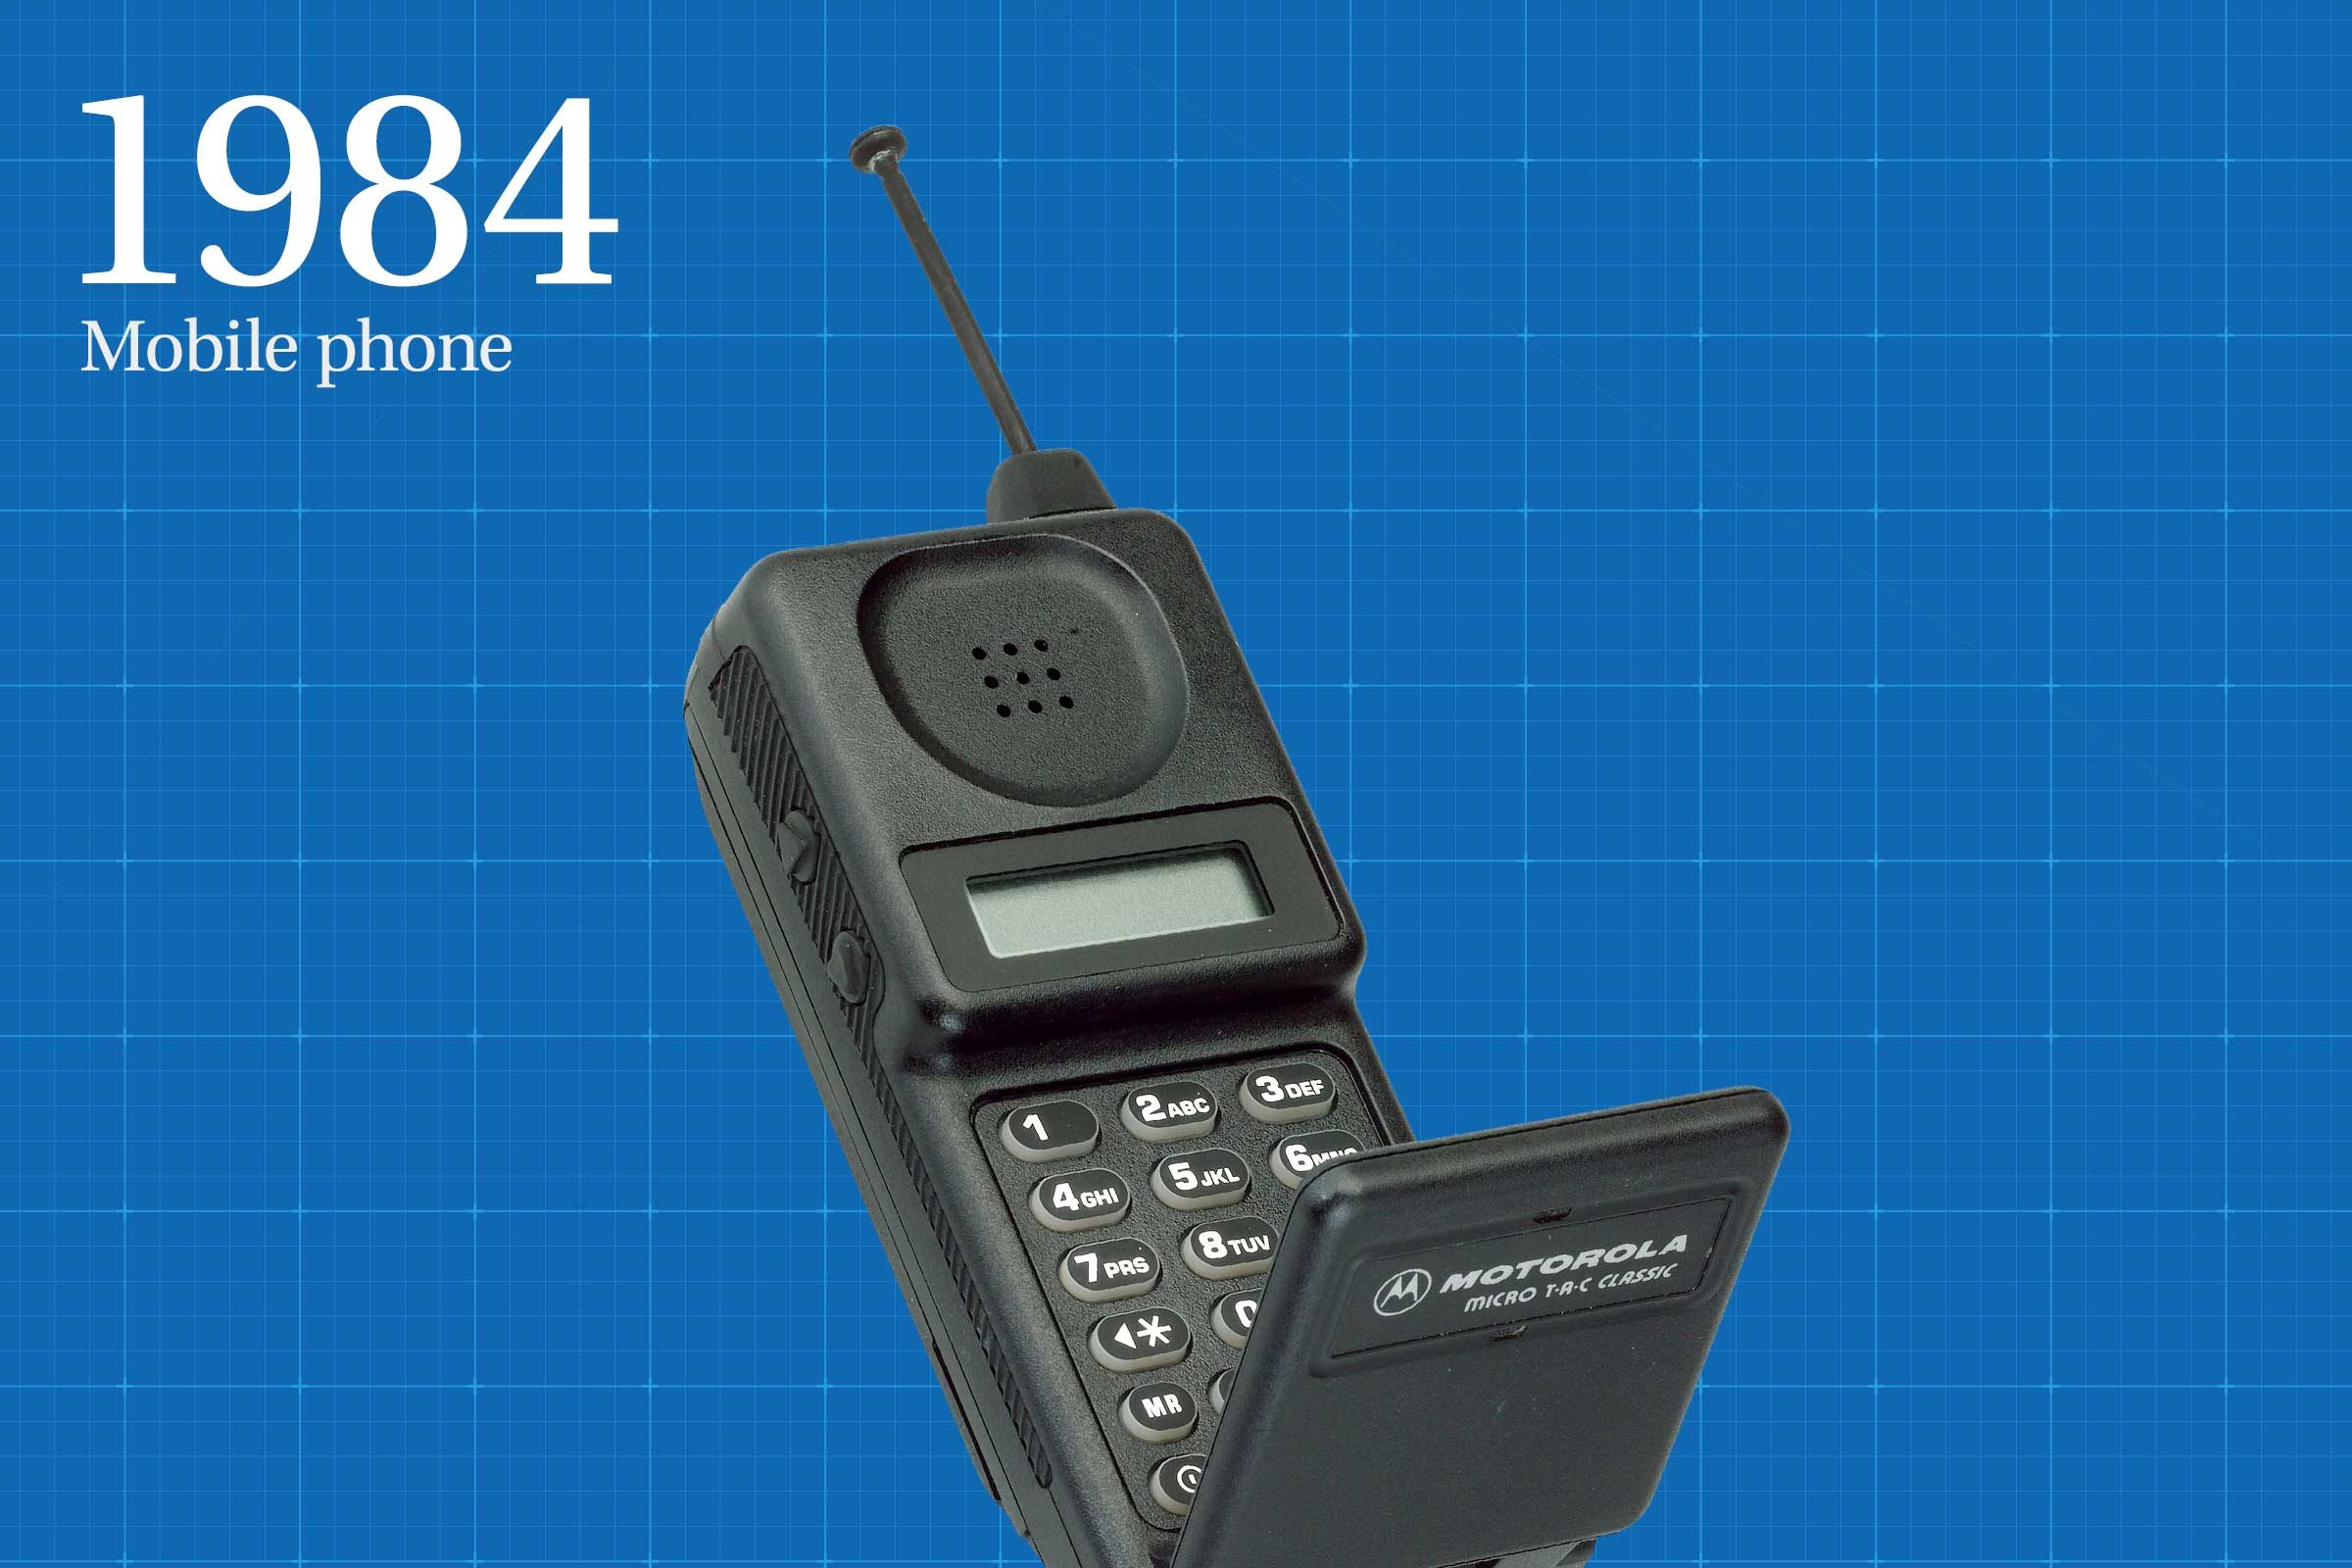 1984: Mobile phone